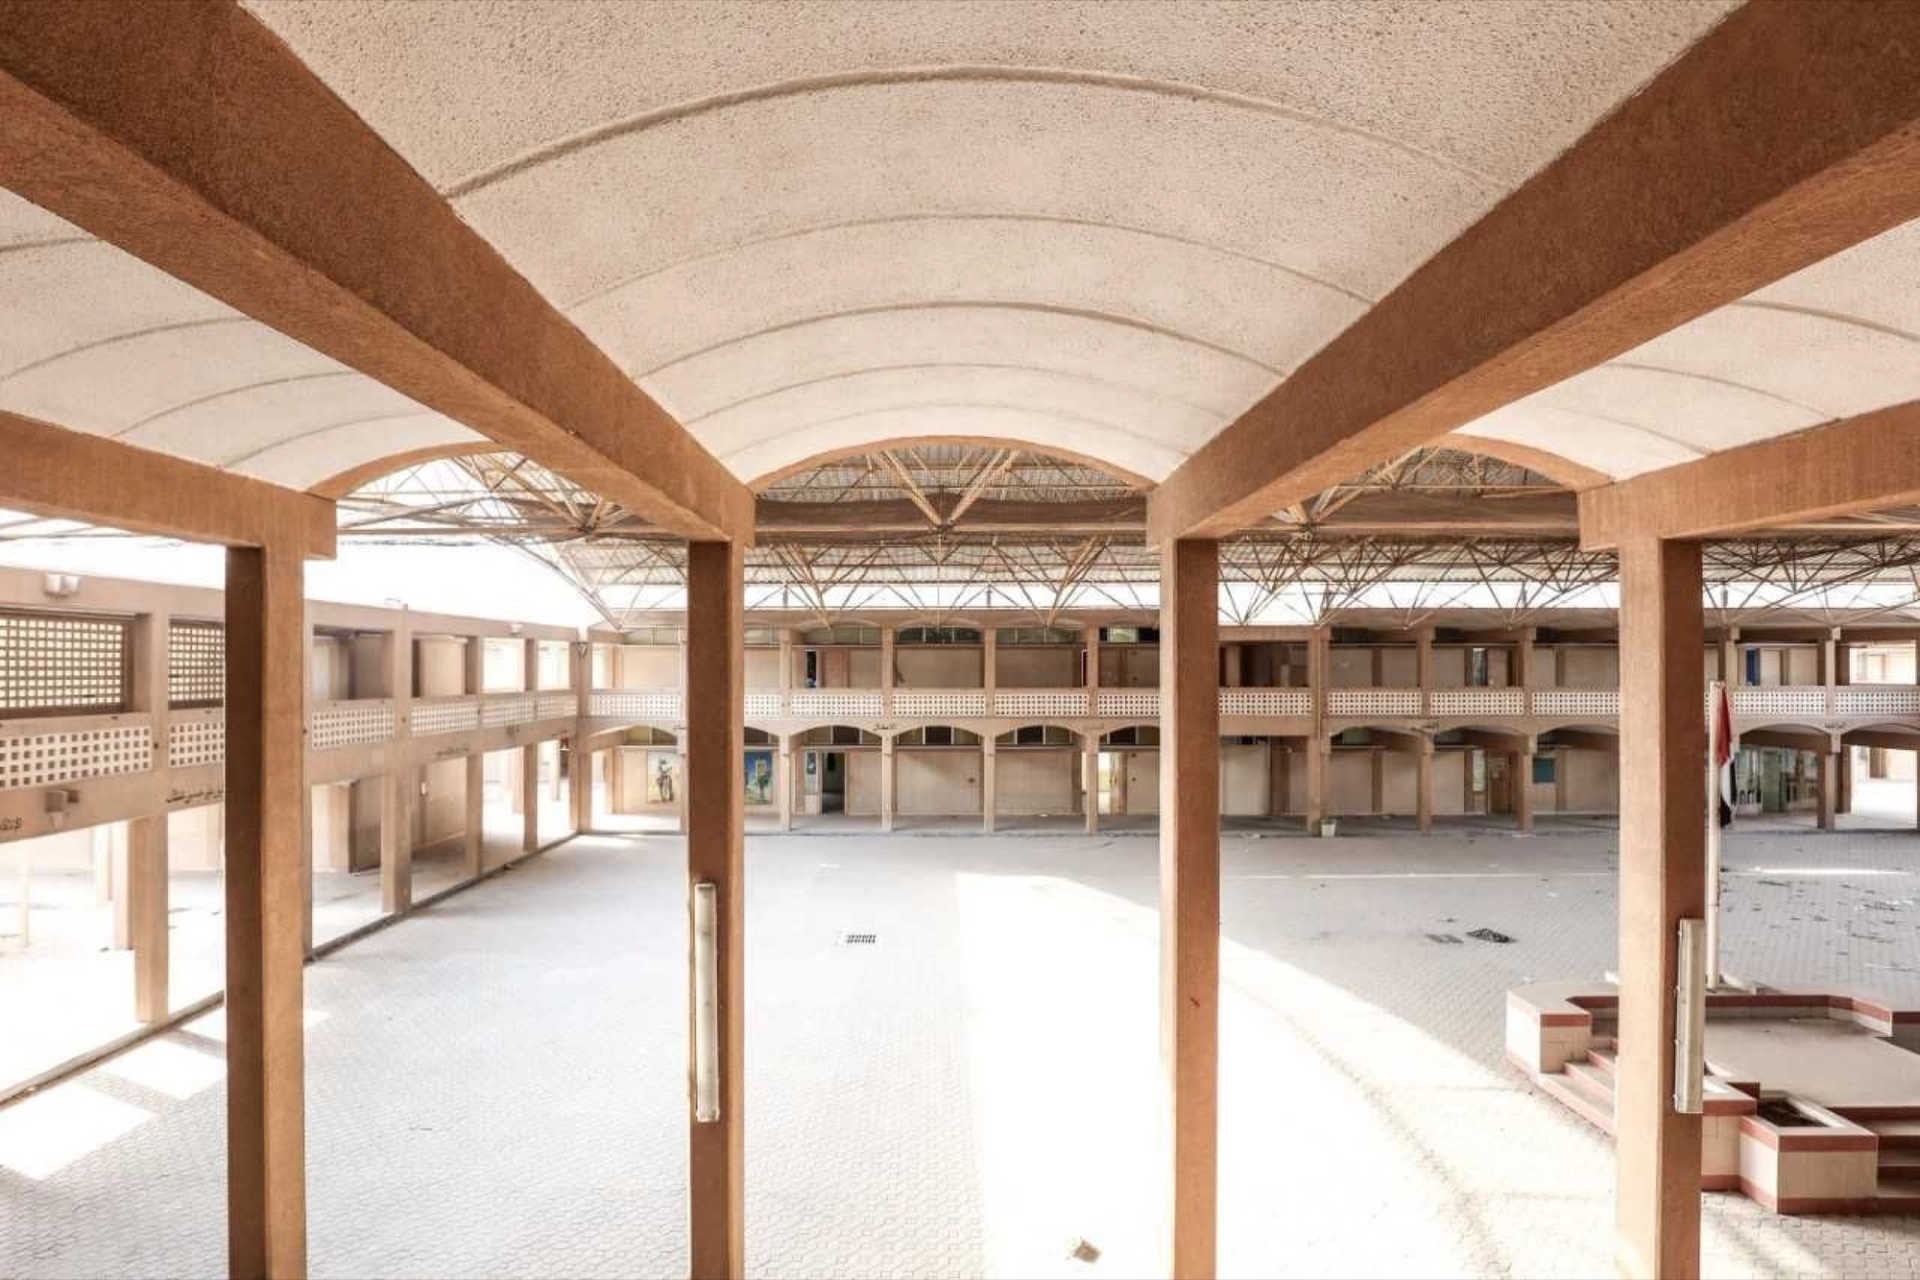 Al Qasimiyah School, Sharjah. Courtesy of the Sharjah Architecture Triennial, 2019.